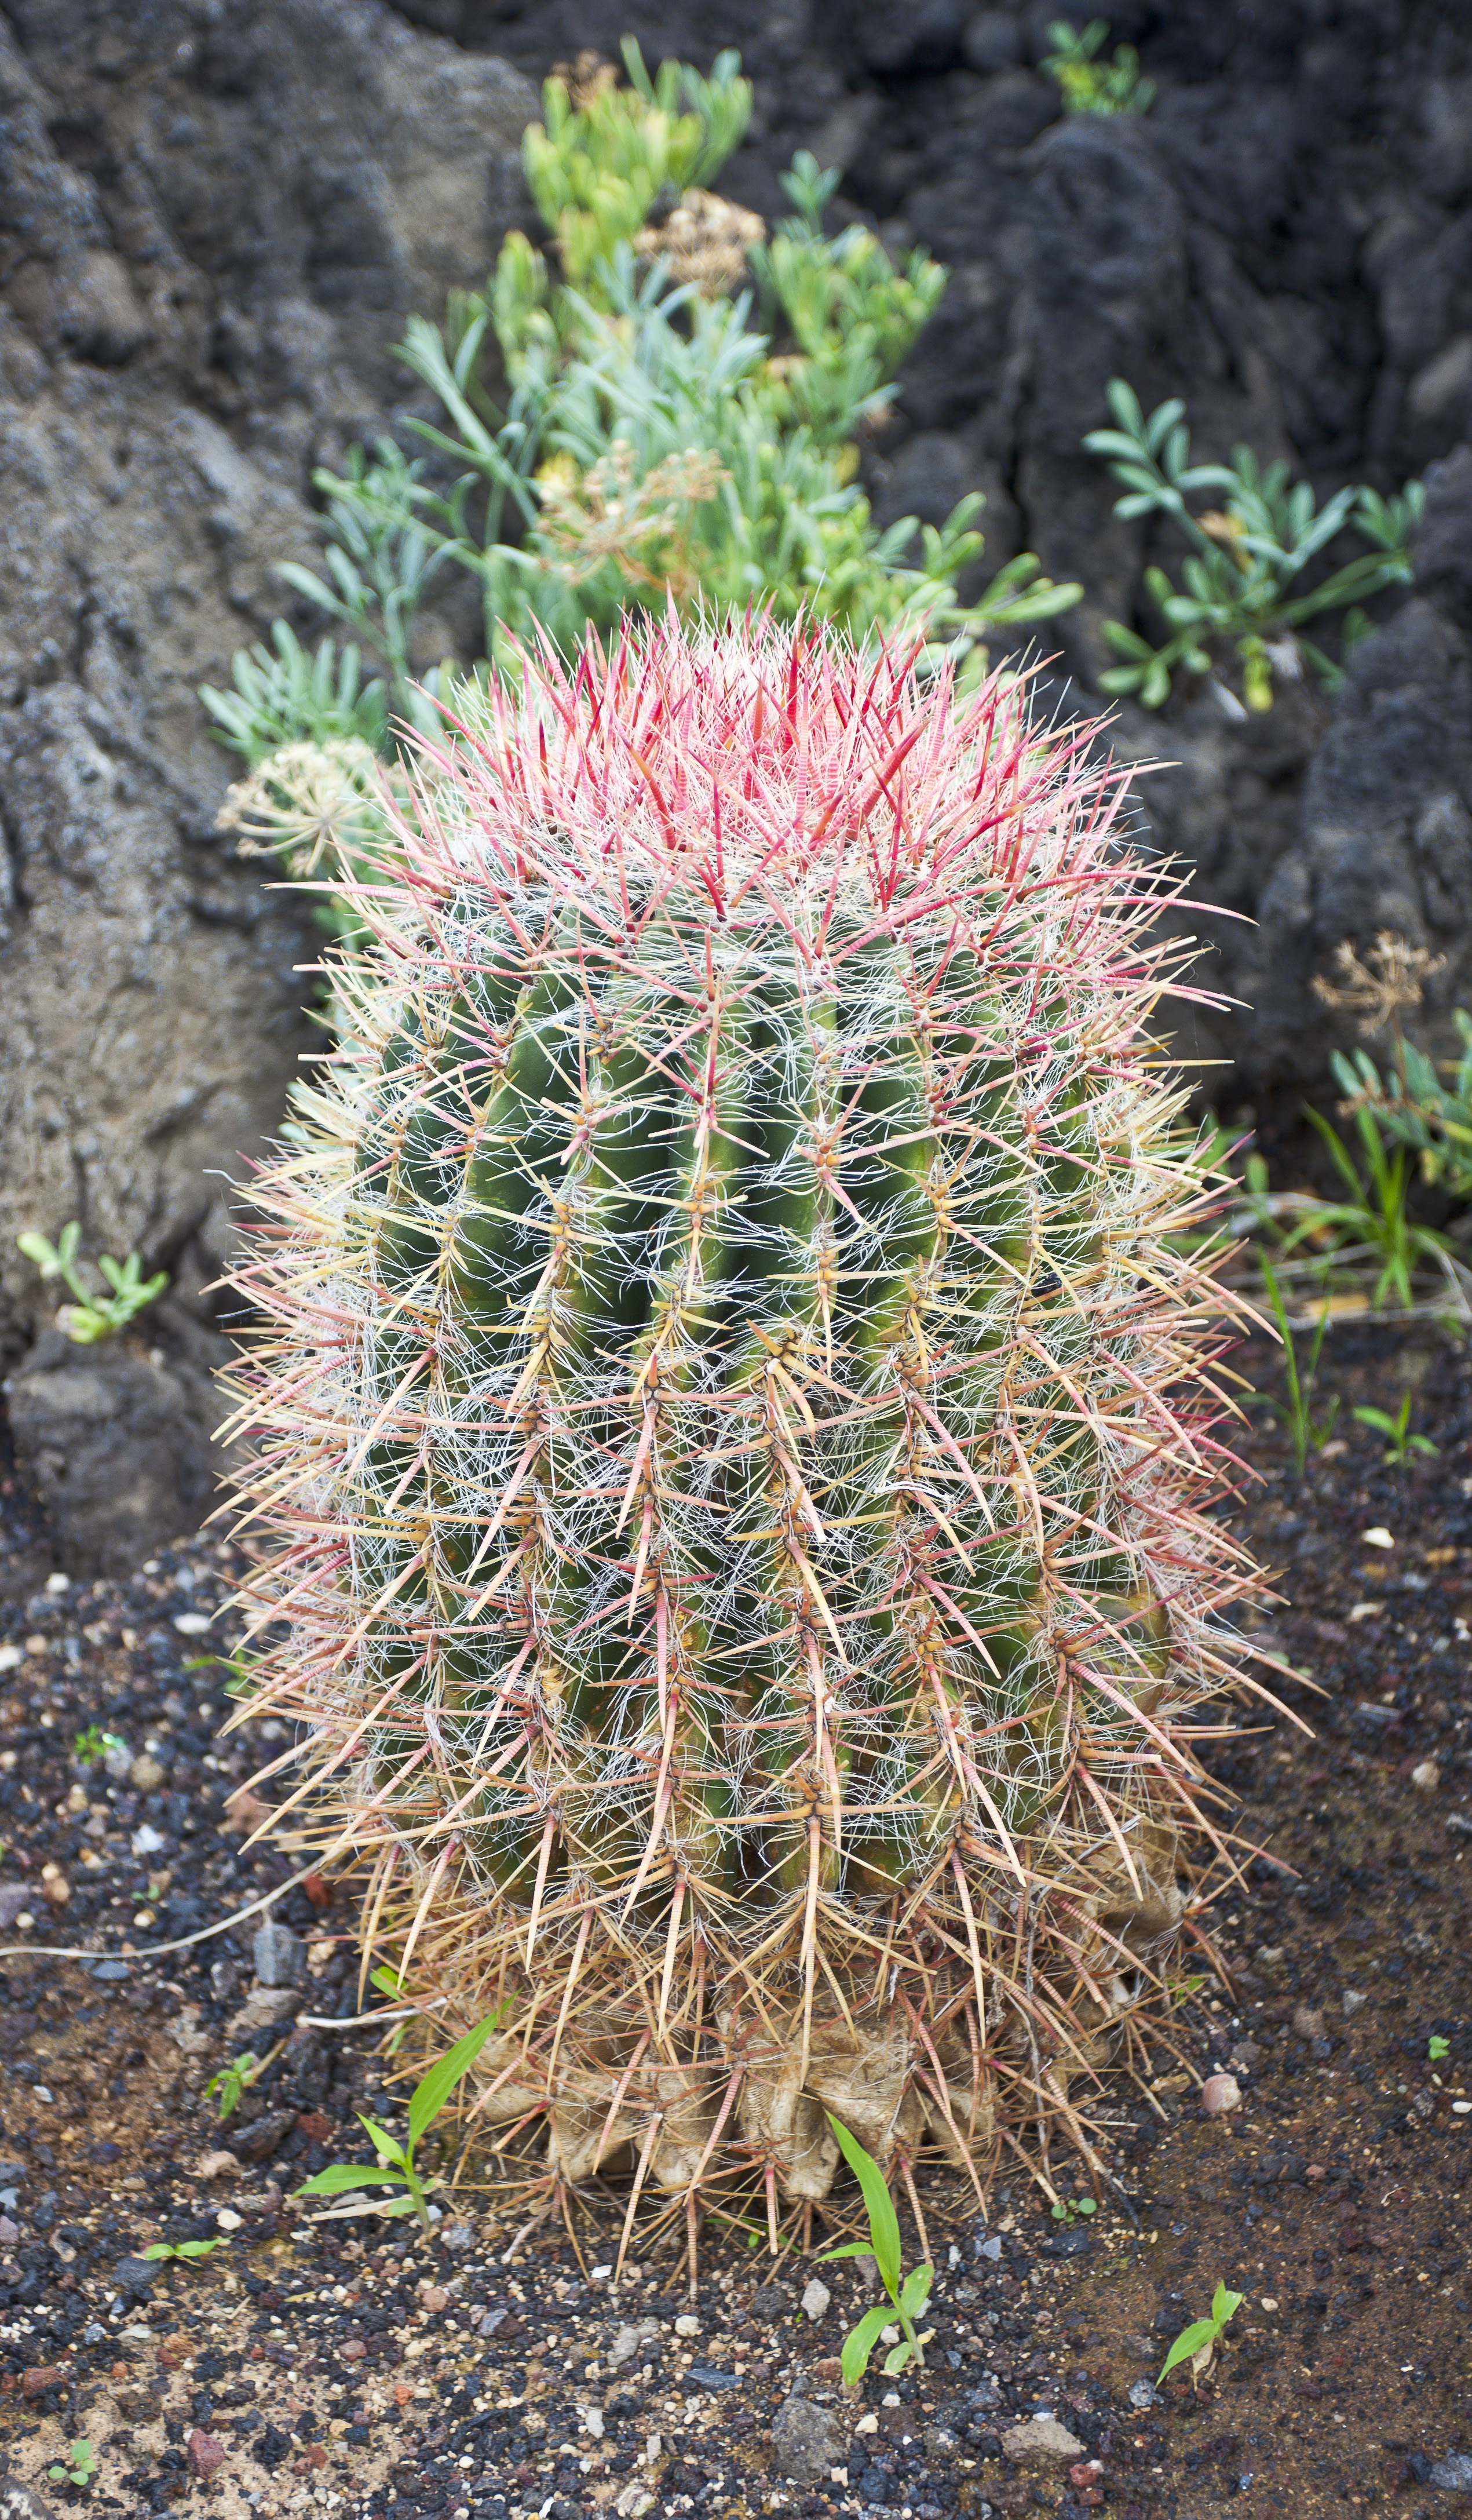 Cactus de Barril (Ferocactus pilosus), Garachico, Tenerife, España, 2012-12-13, DD 01